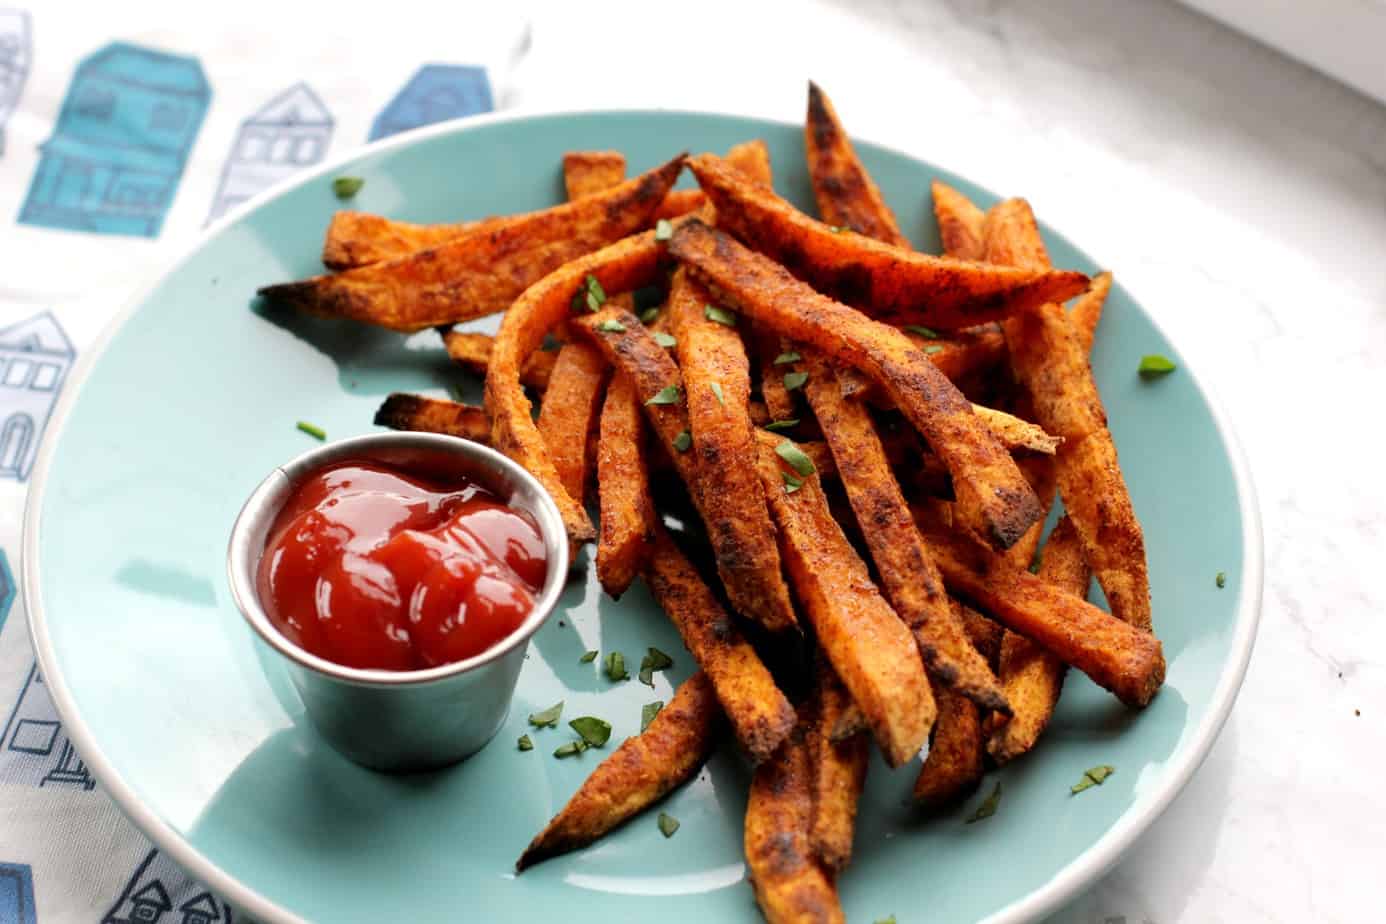 https://iheartvegetables.com/wp-content/uploads/2018/02/spicy-sweet-potato-fries.jpg